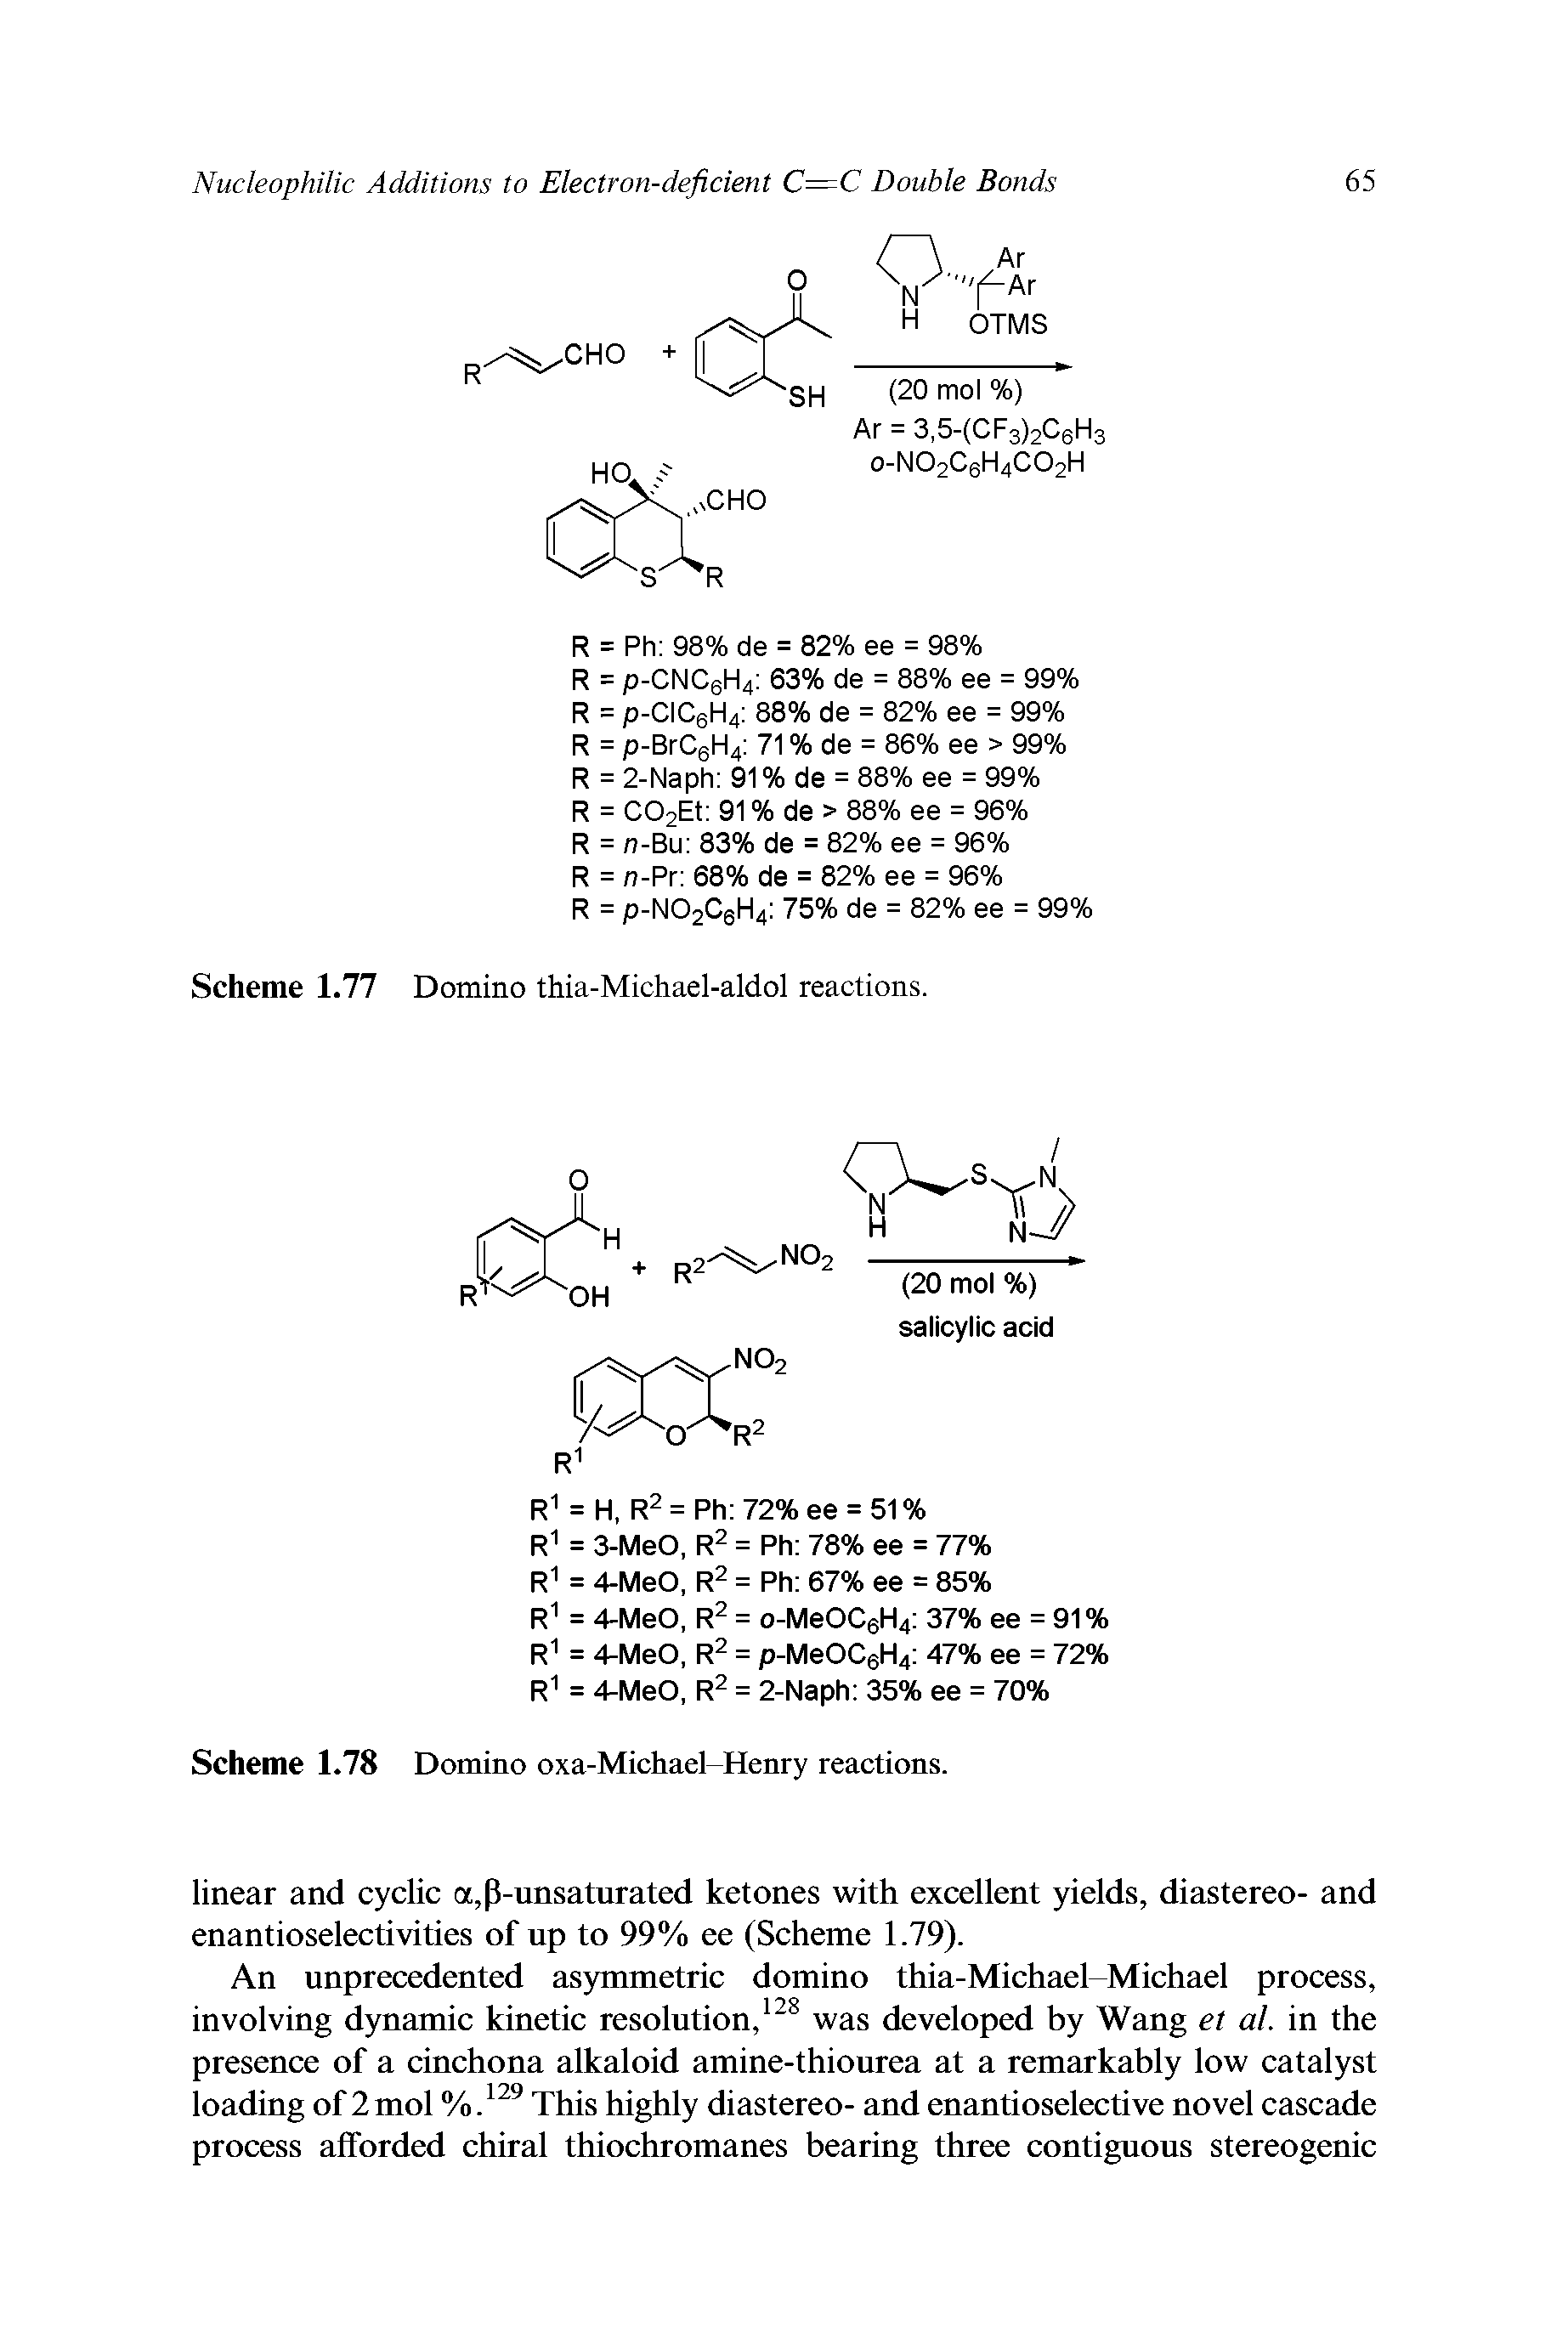 Scheme 1.77 Domino thia-Michael-aldol reactions.